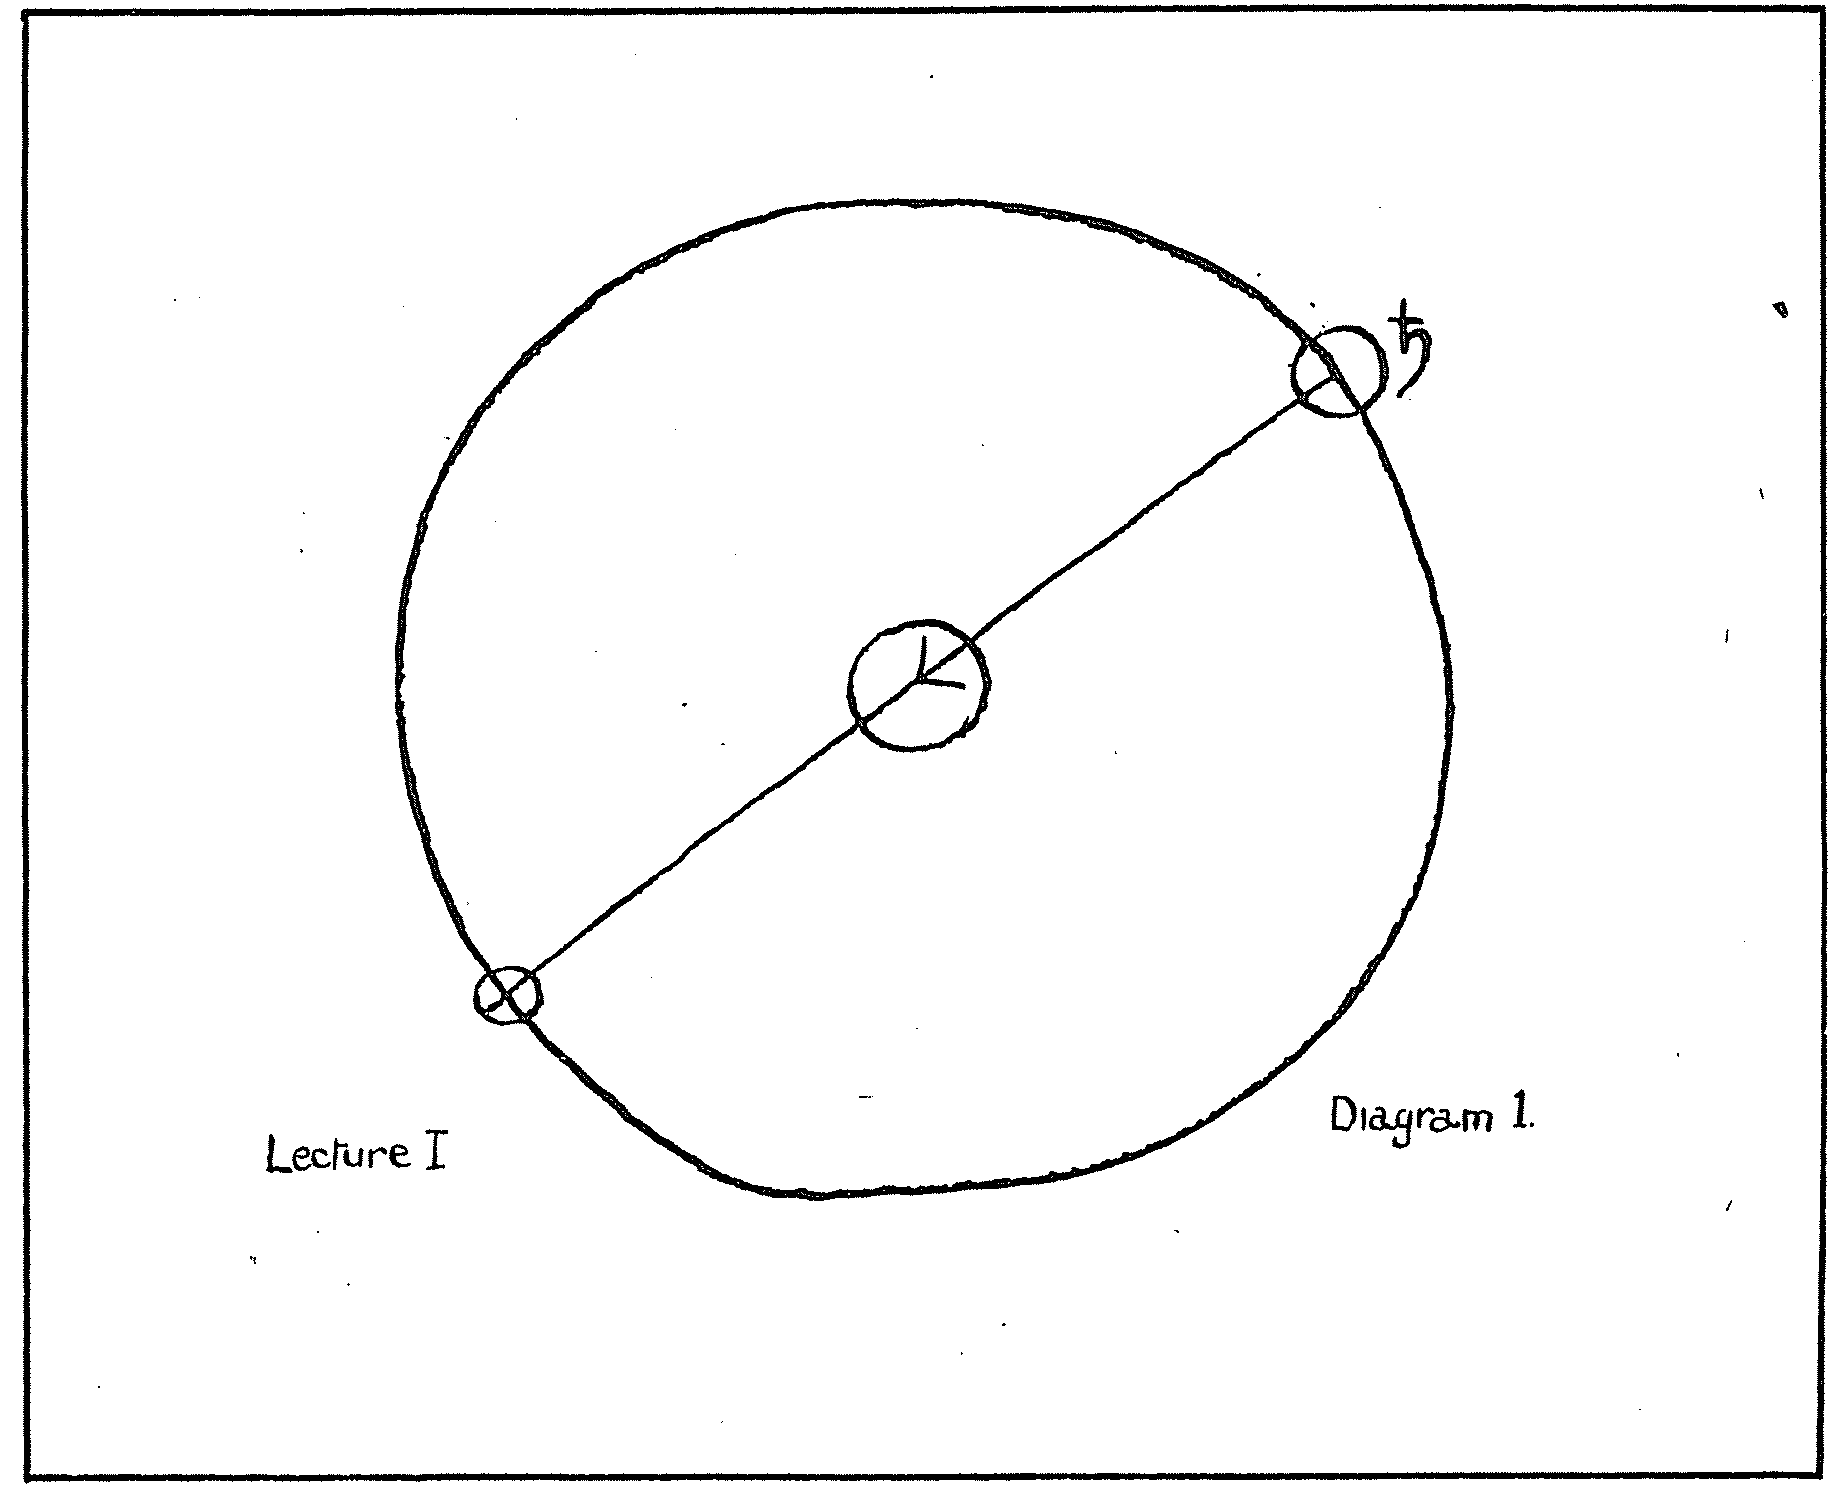 Diagram I